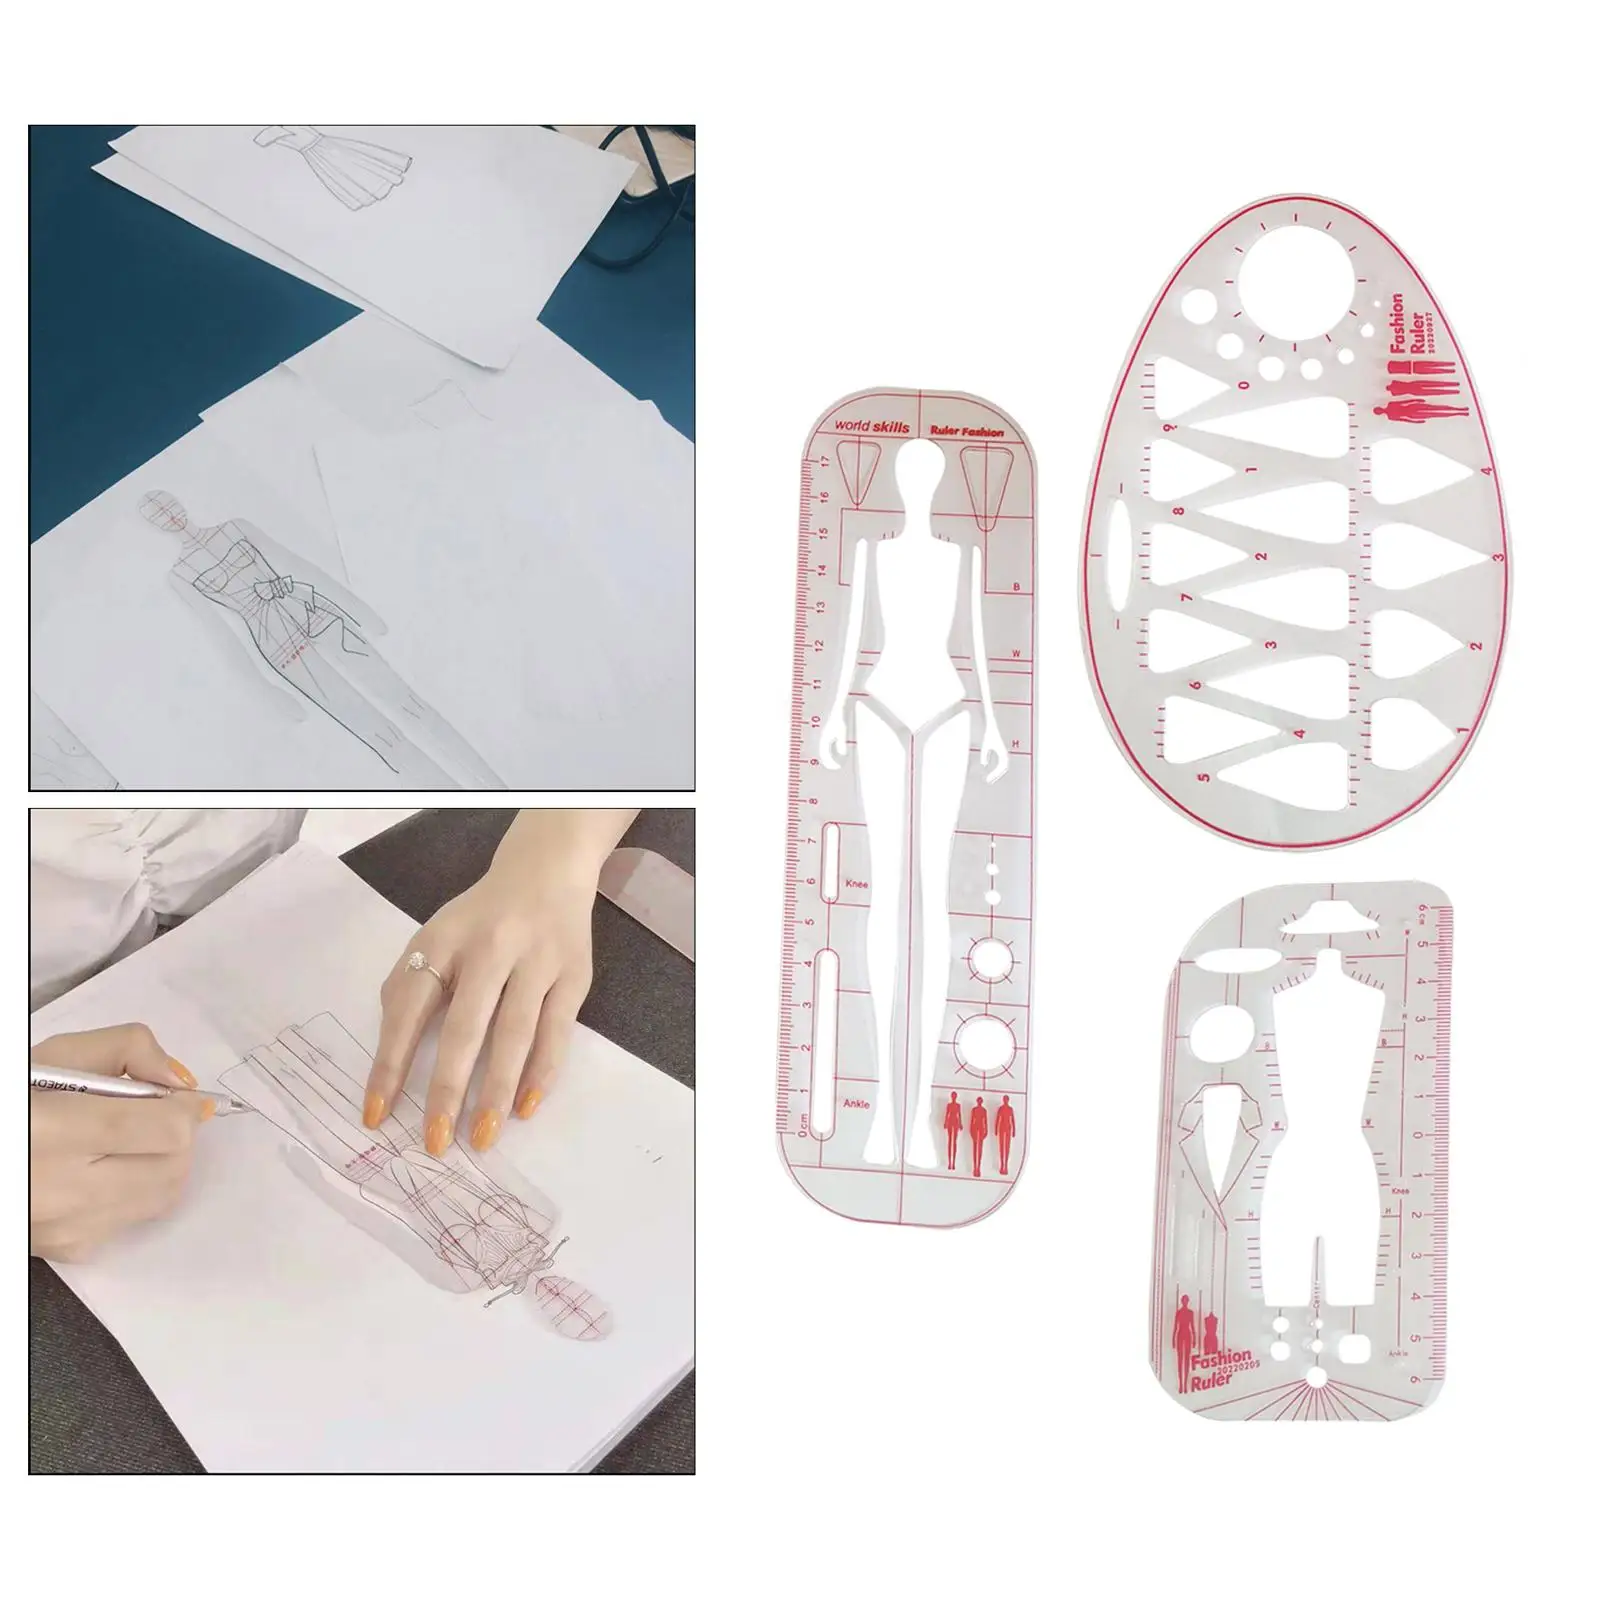 Fashion Drawing Template Ruler Designing Tailoring Dresses Transparent Clothing Measuring Models Fashion Illustration Rulers